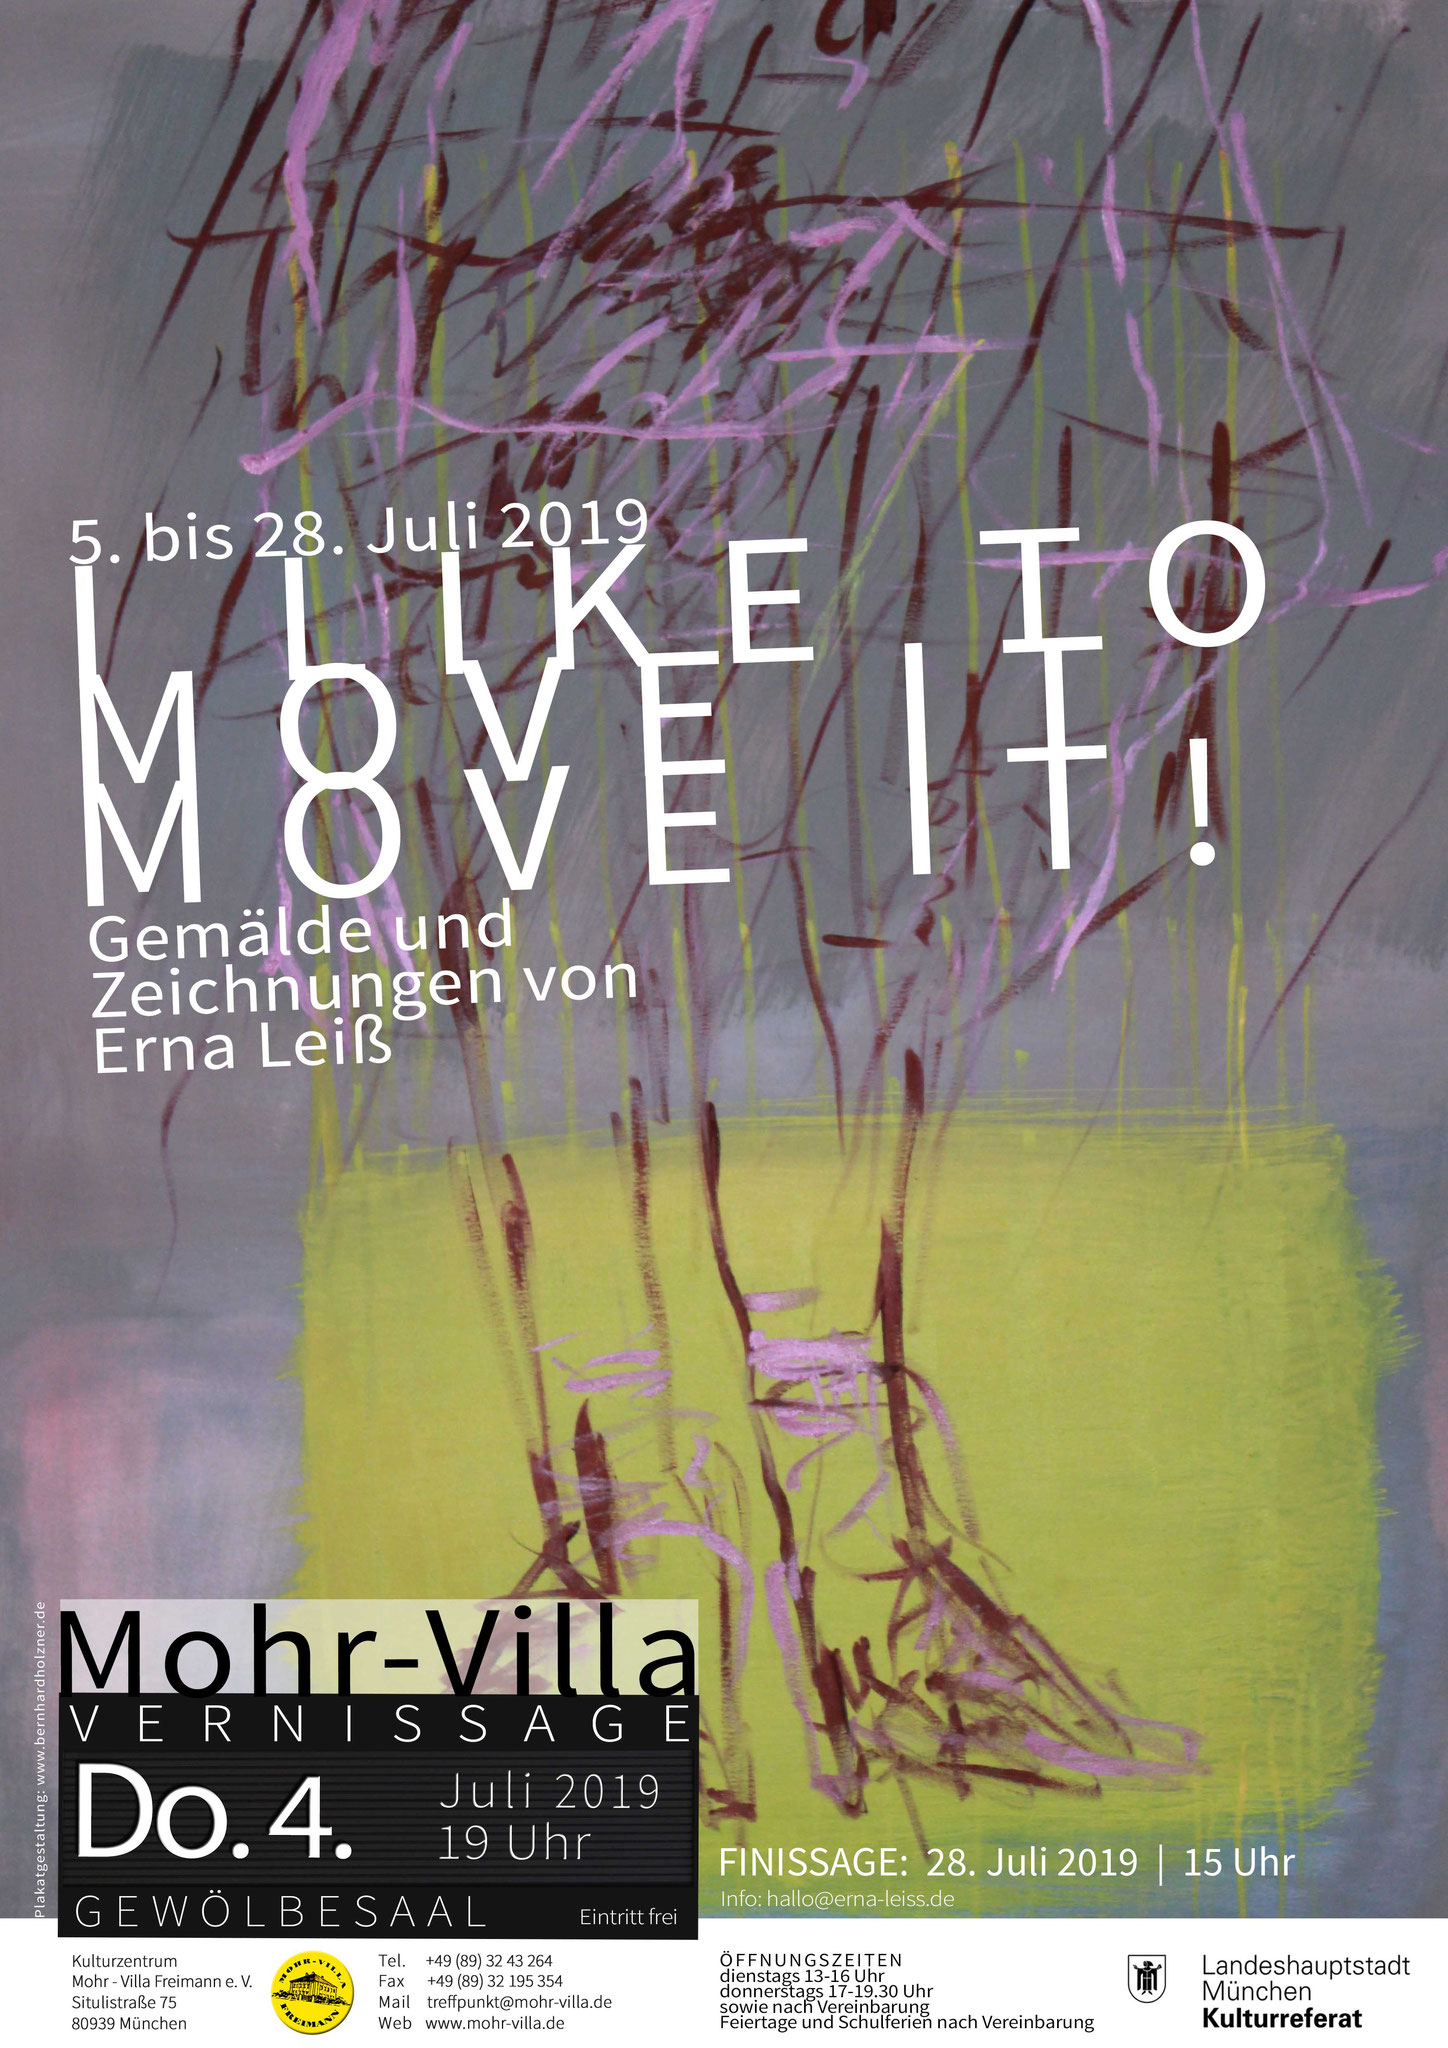 Plakat zur Veranstaltung: I like to move it, move it!